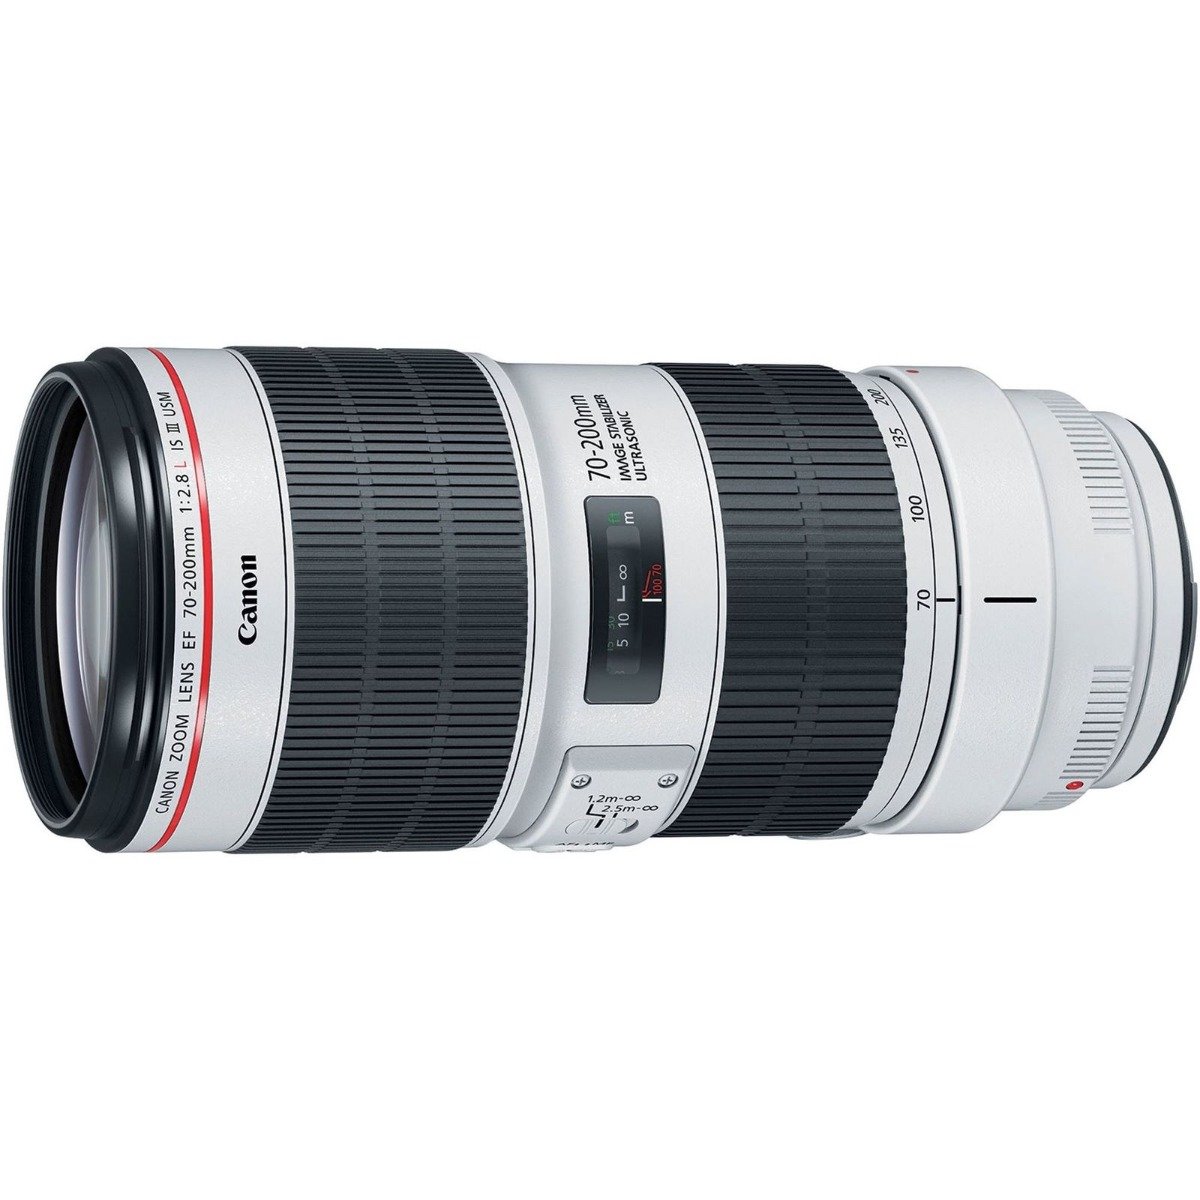 Buy Canon 70-200mm f/2.8L EF IS III USM Lens Online | Deals All